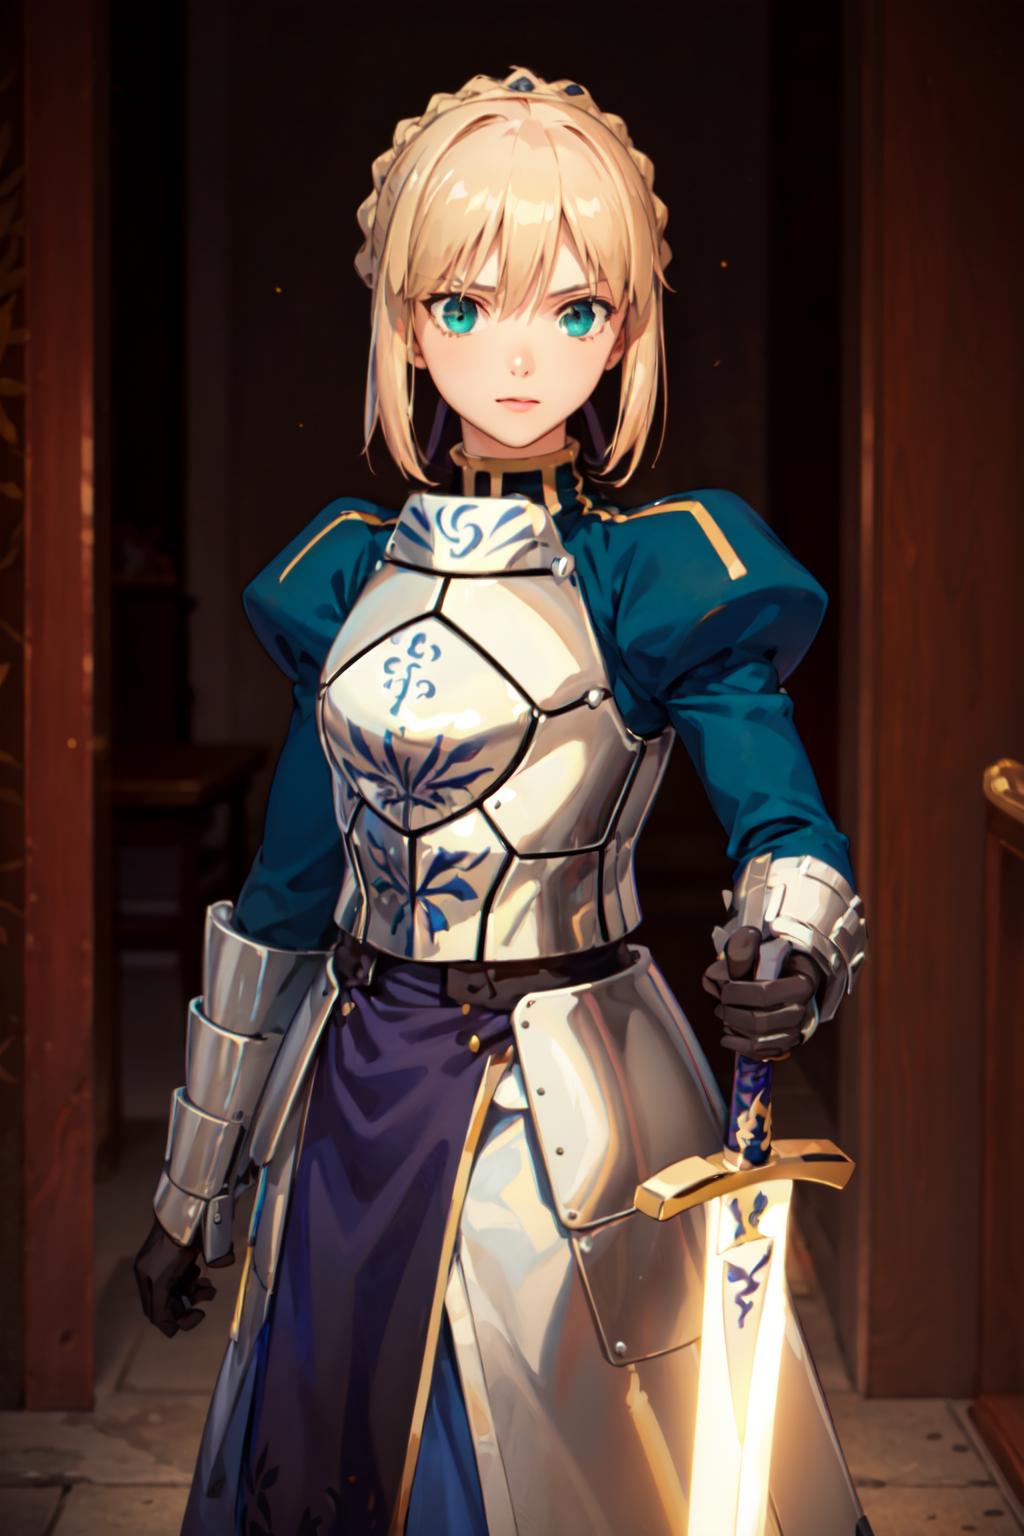 A cartoonish girl in knight's armor holding a sword.